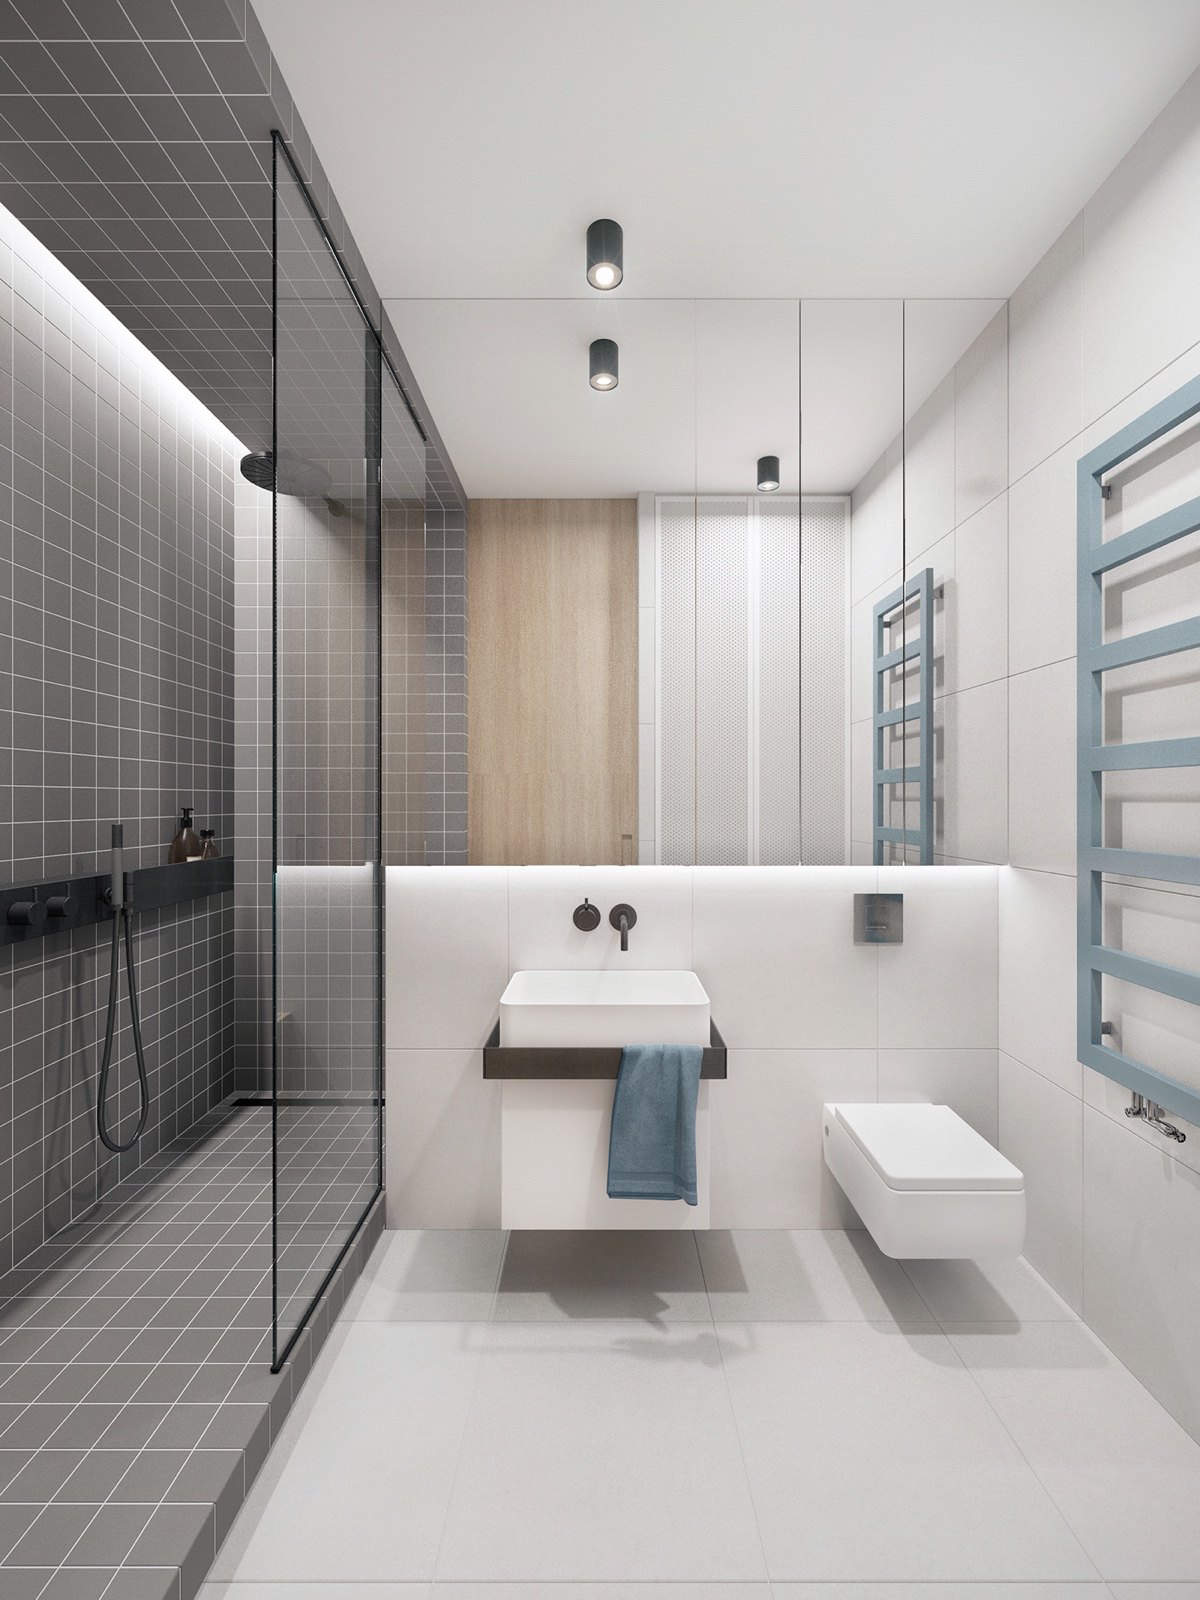 modern-white-bathroom-walk-in shower "width =" 1200 "height =" 1600 "srcset =" https://mileray.com/wp-content/uploads/2017/04/modern-white-bathroom-walk -in- Shower-Lugerin-Igor.jpg 1200w, https://mileray.com/wp-content/uploads/2017/04/modern-white-bathroom-walk-in-shower-Lugerin-Igor-225x300.jpg 225w, https: //mileray.com/wp-content/uploads/2017/04/modern-white-bathroom-walk-in-shower-Lugerin-Igor-768x1024.jpg 768w, https://mileray.com/wp- content / uploads / 2017/04 / modern-white-bathroom-walk-in-shower-Lugerin-Igor-696x928.jpg 696w, https://mileray.com/wp-content/uploads/2017/04/modern-white -Bad-walk-in- Shower-Lugerin-Igor-1068x1424.jpg 1068w, https://mileray.com/wp-content/uploads/2017/04/modern-white-bathroom-walk-in-shower-Lugerin- Igor-315x420.jpg 315w " Sizes = "(maximum width: 1200px) 100vw, 1200px